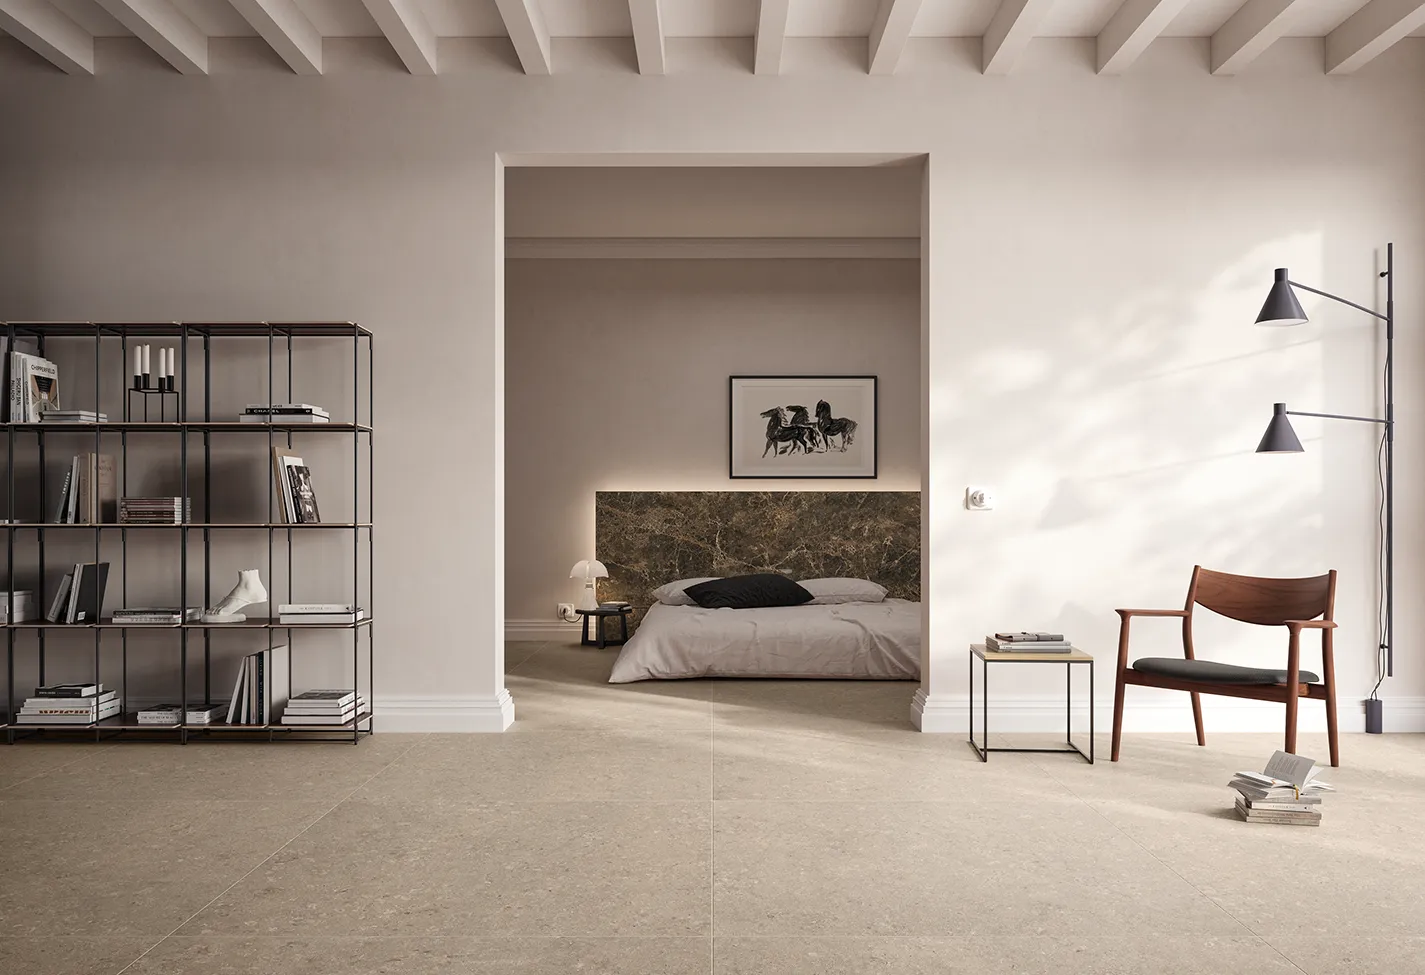 Spacious minimalist interior with beige gres porcellanato flooring, modern metal bookshelf, sleek bedroom view, and designer furniture.